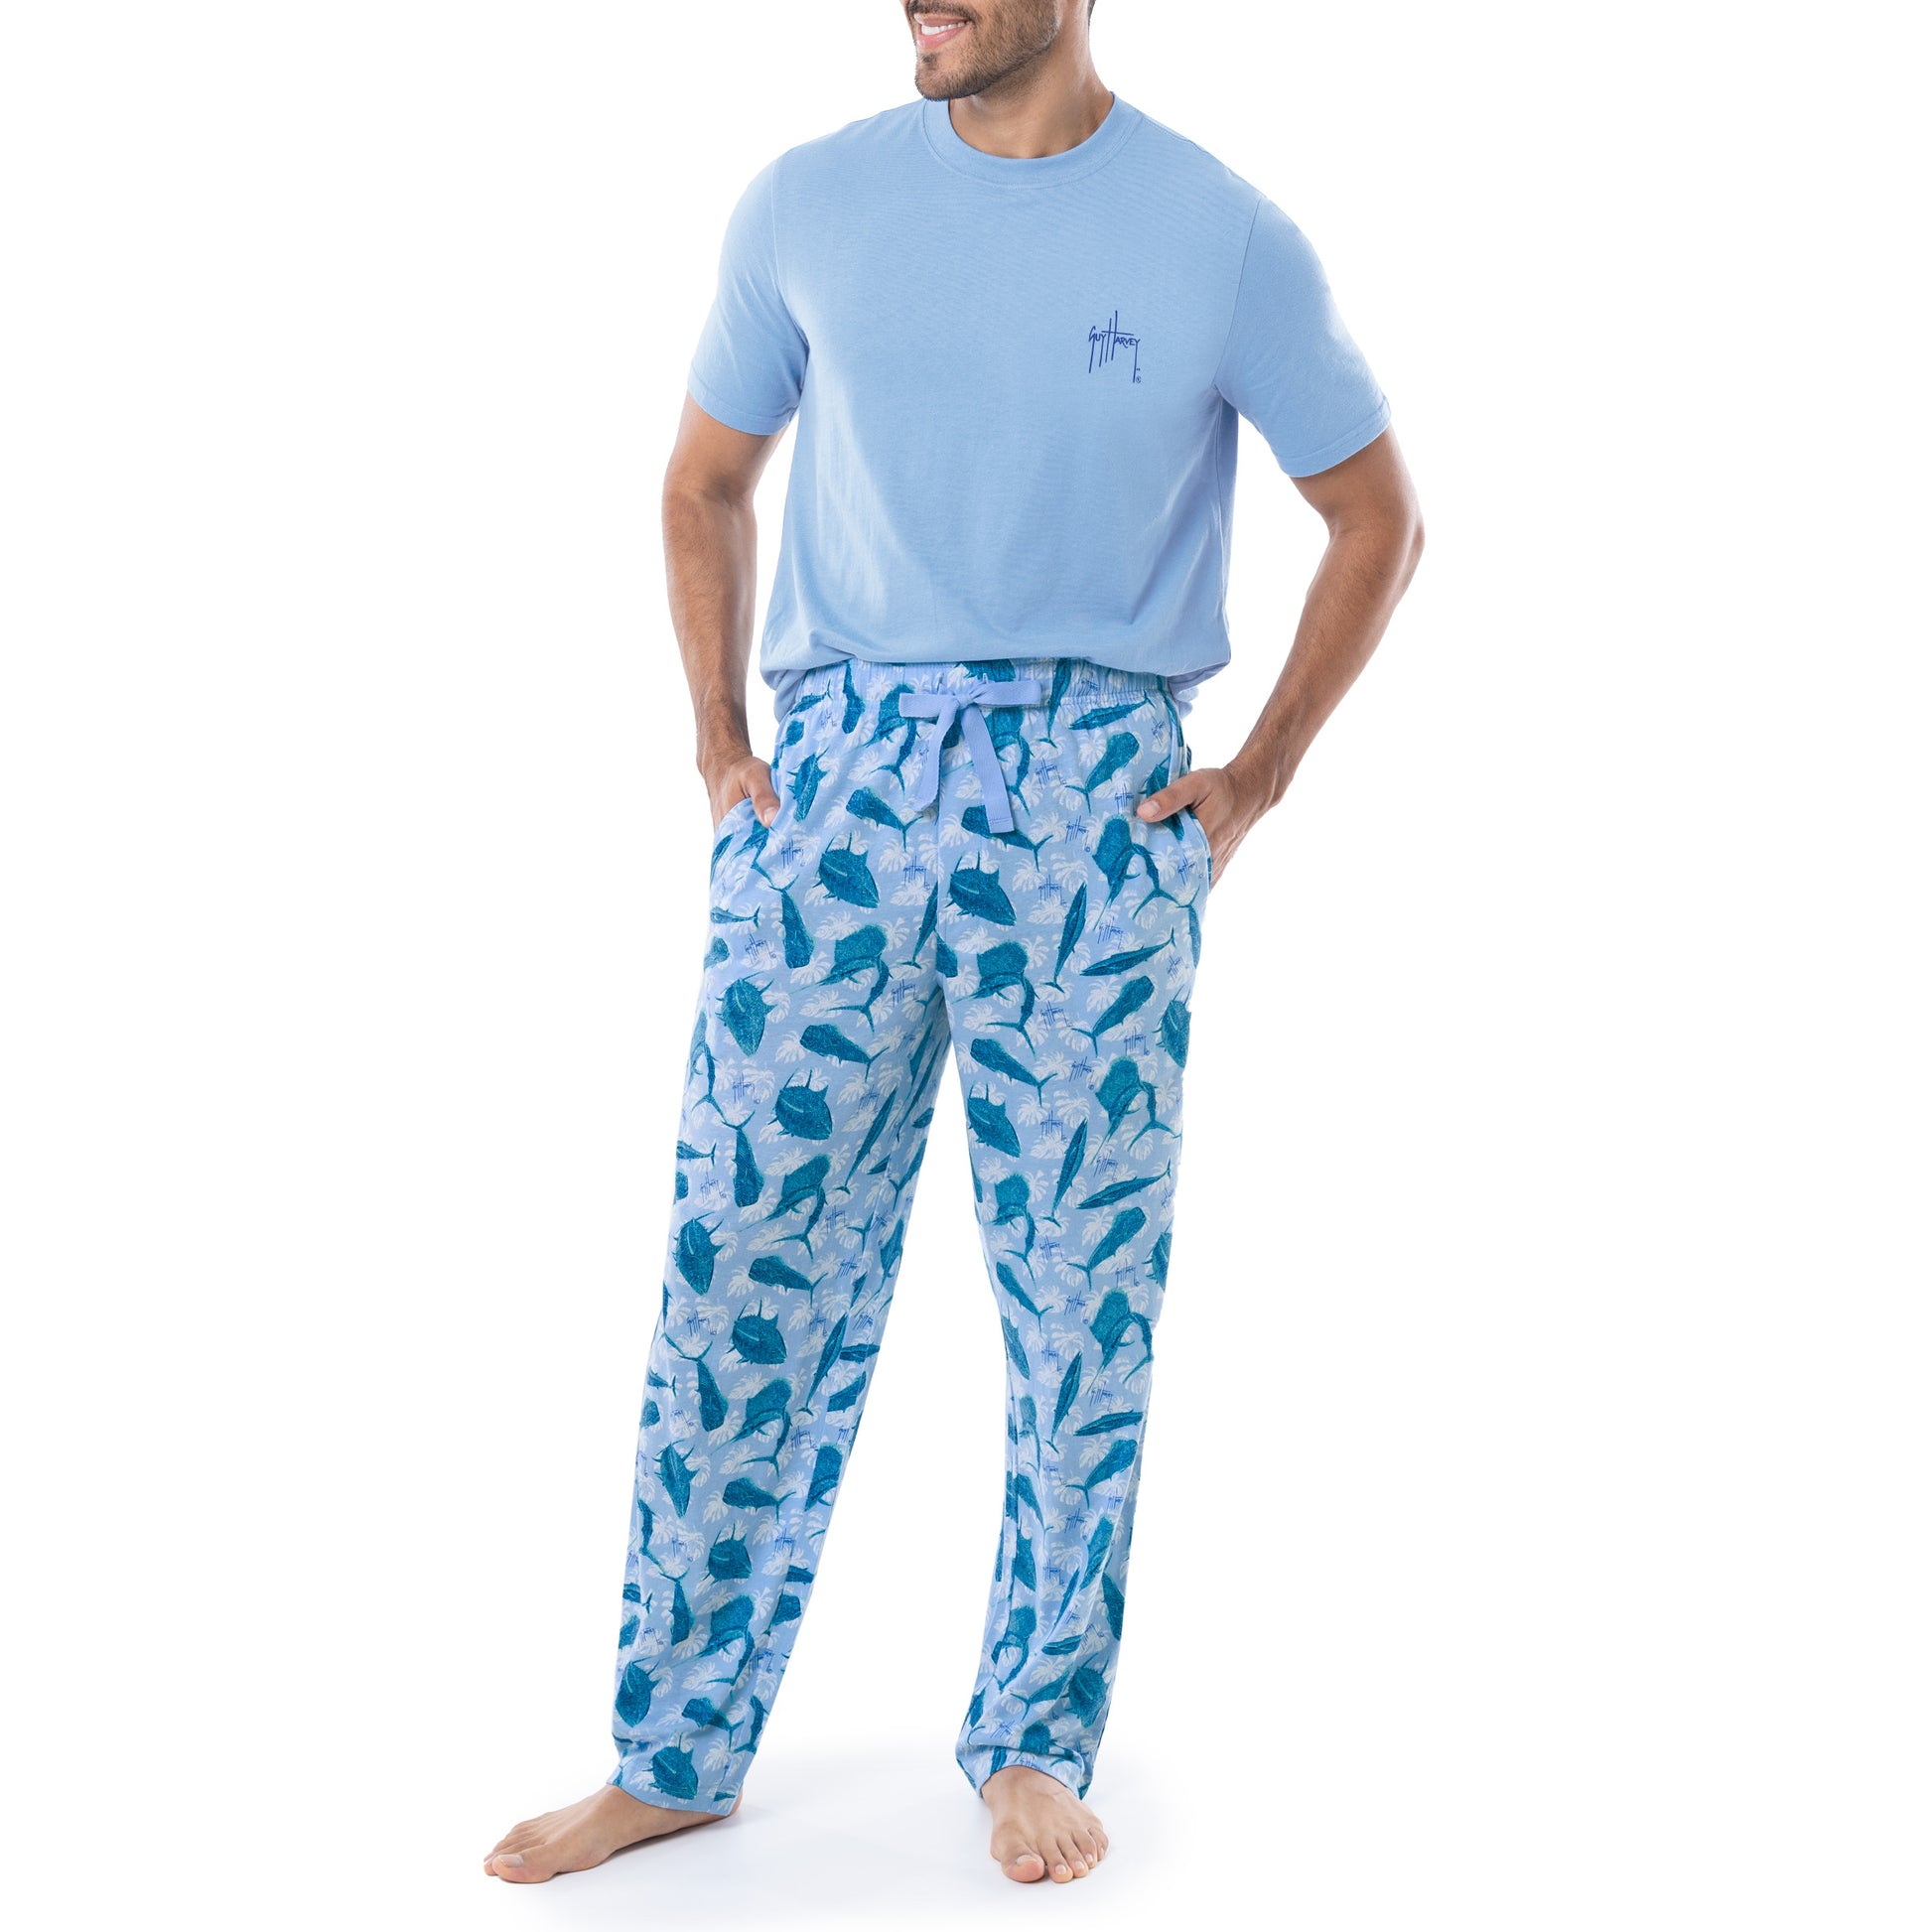 Men’s 2 Jersey, Elastic Waistband w. Pockets, Button Fly, Pajama Sleep Pants